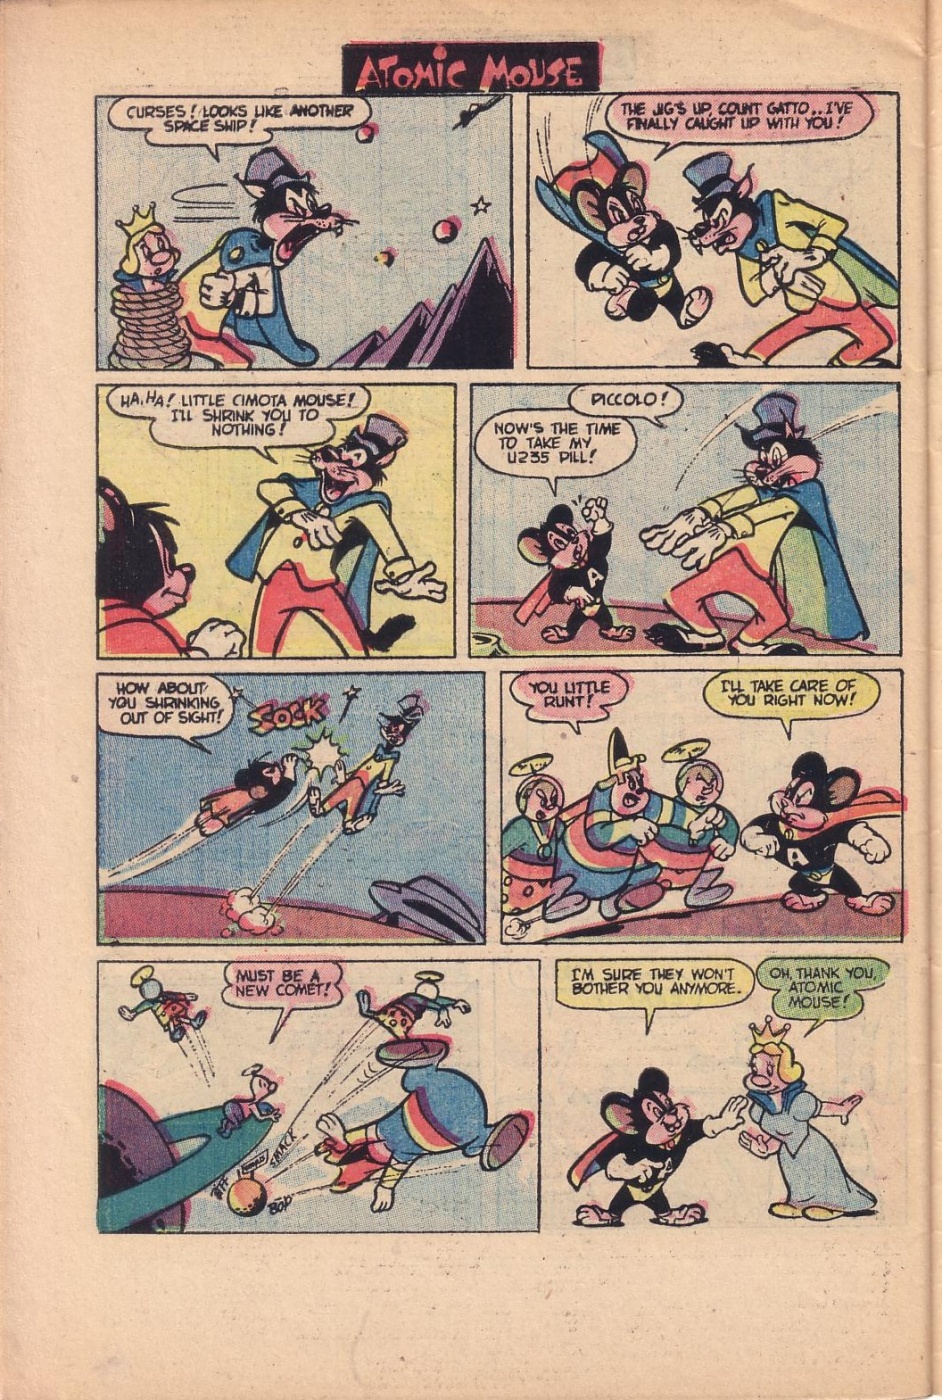 Atomic Mouse Comics - Funny Comics (32)